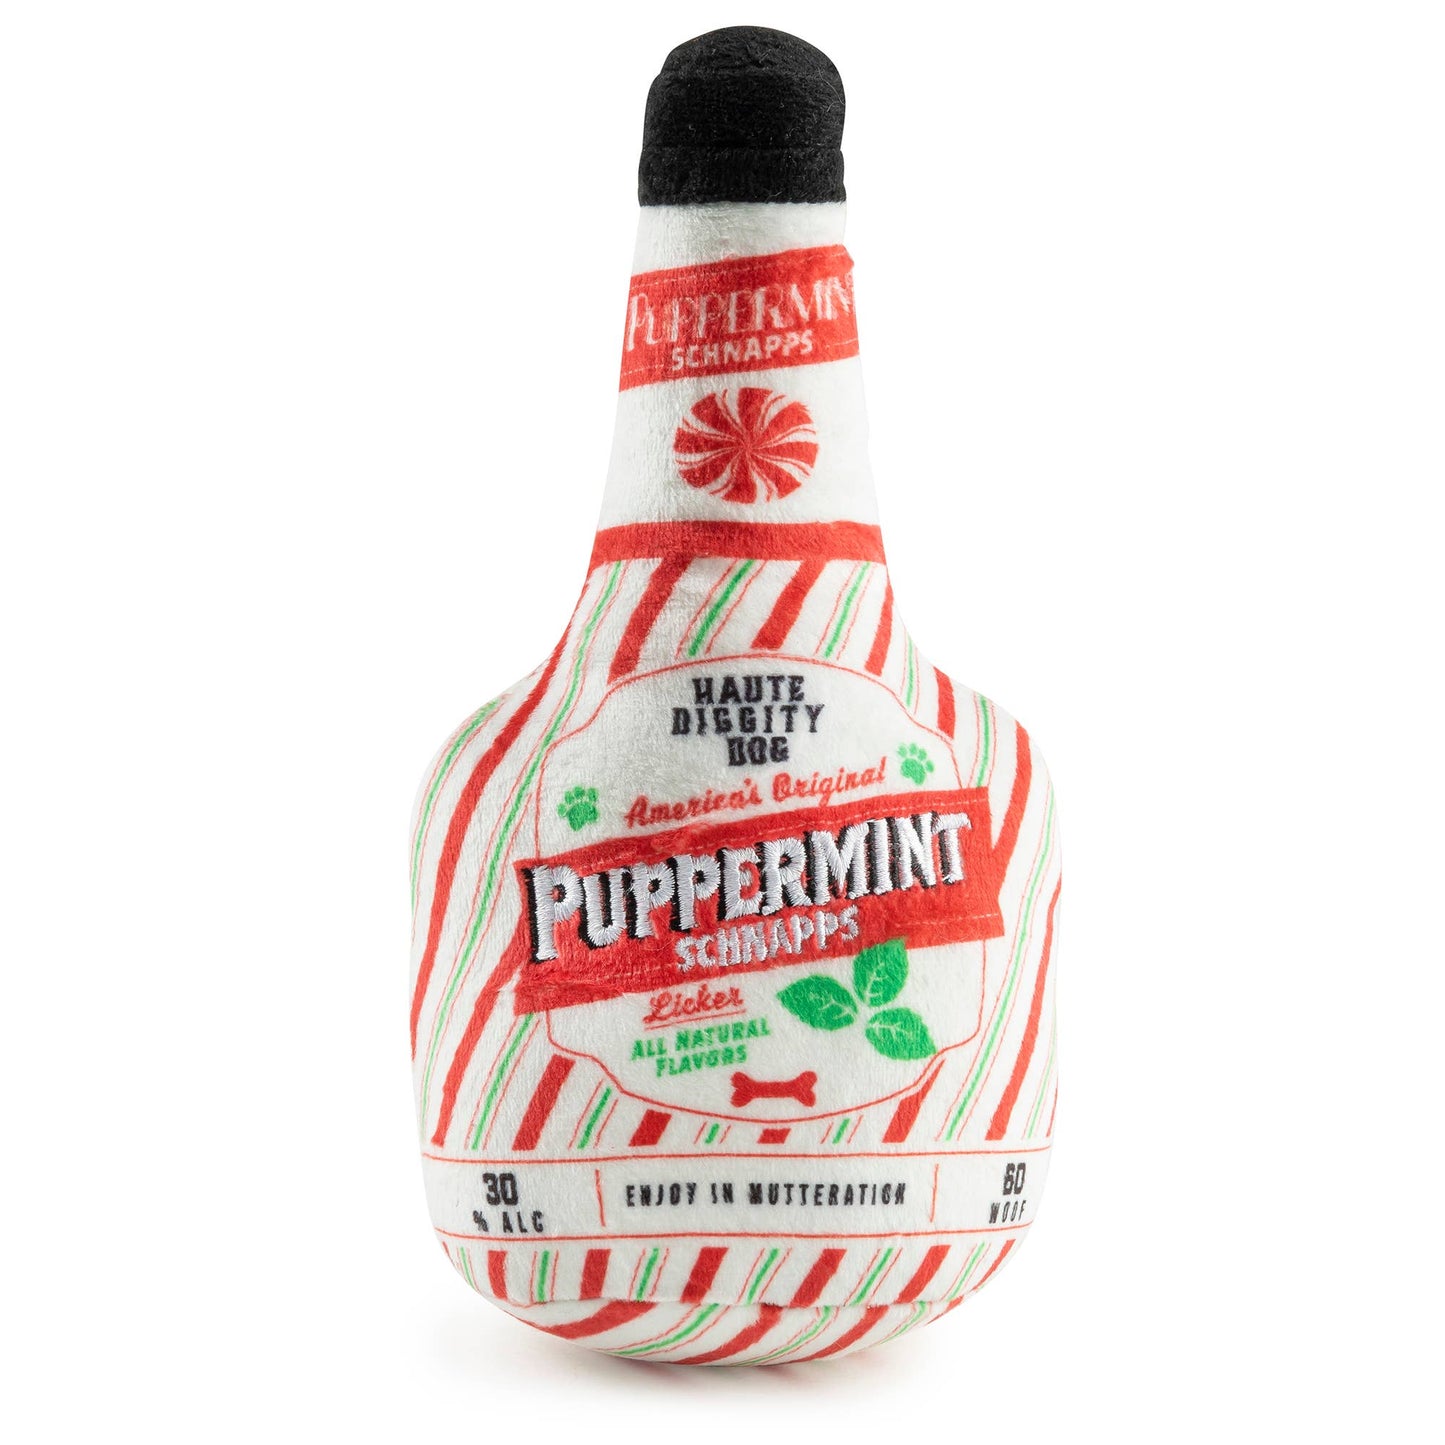 Puppermint Schnapps Bottle Dog Toy